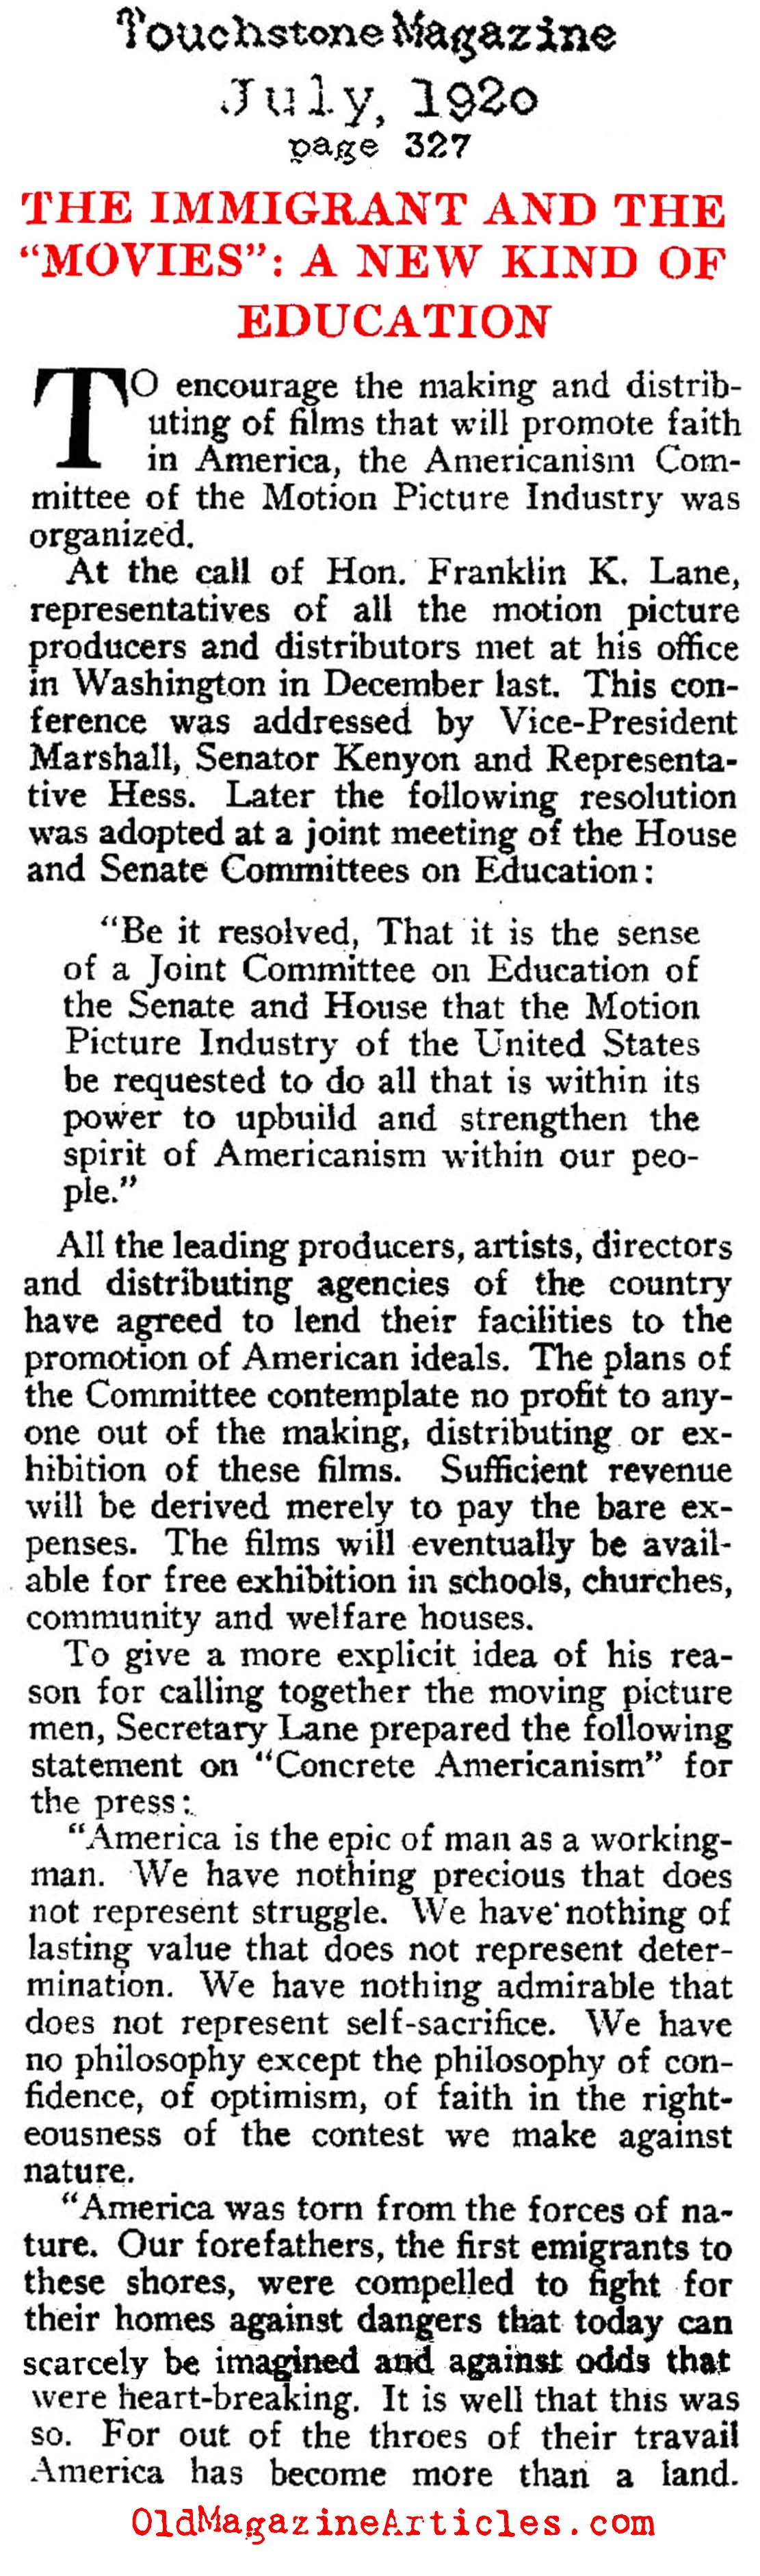 Promoting Citizenship (Touchstone Magazine, 1920)